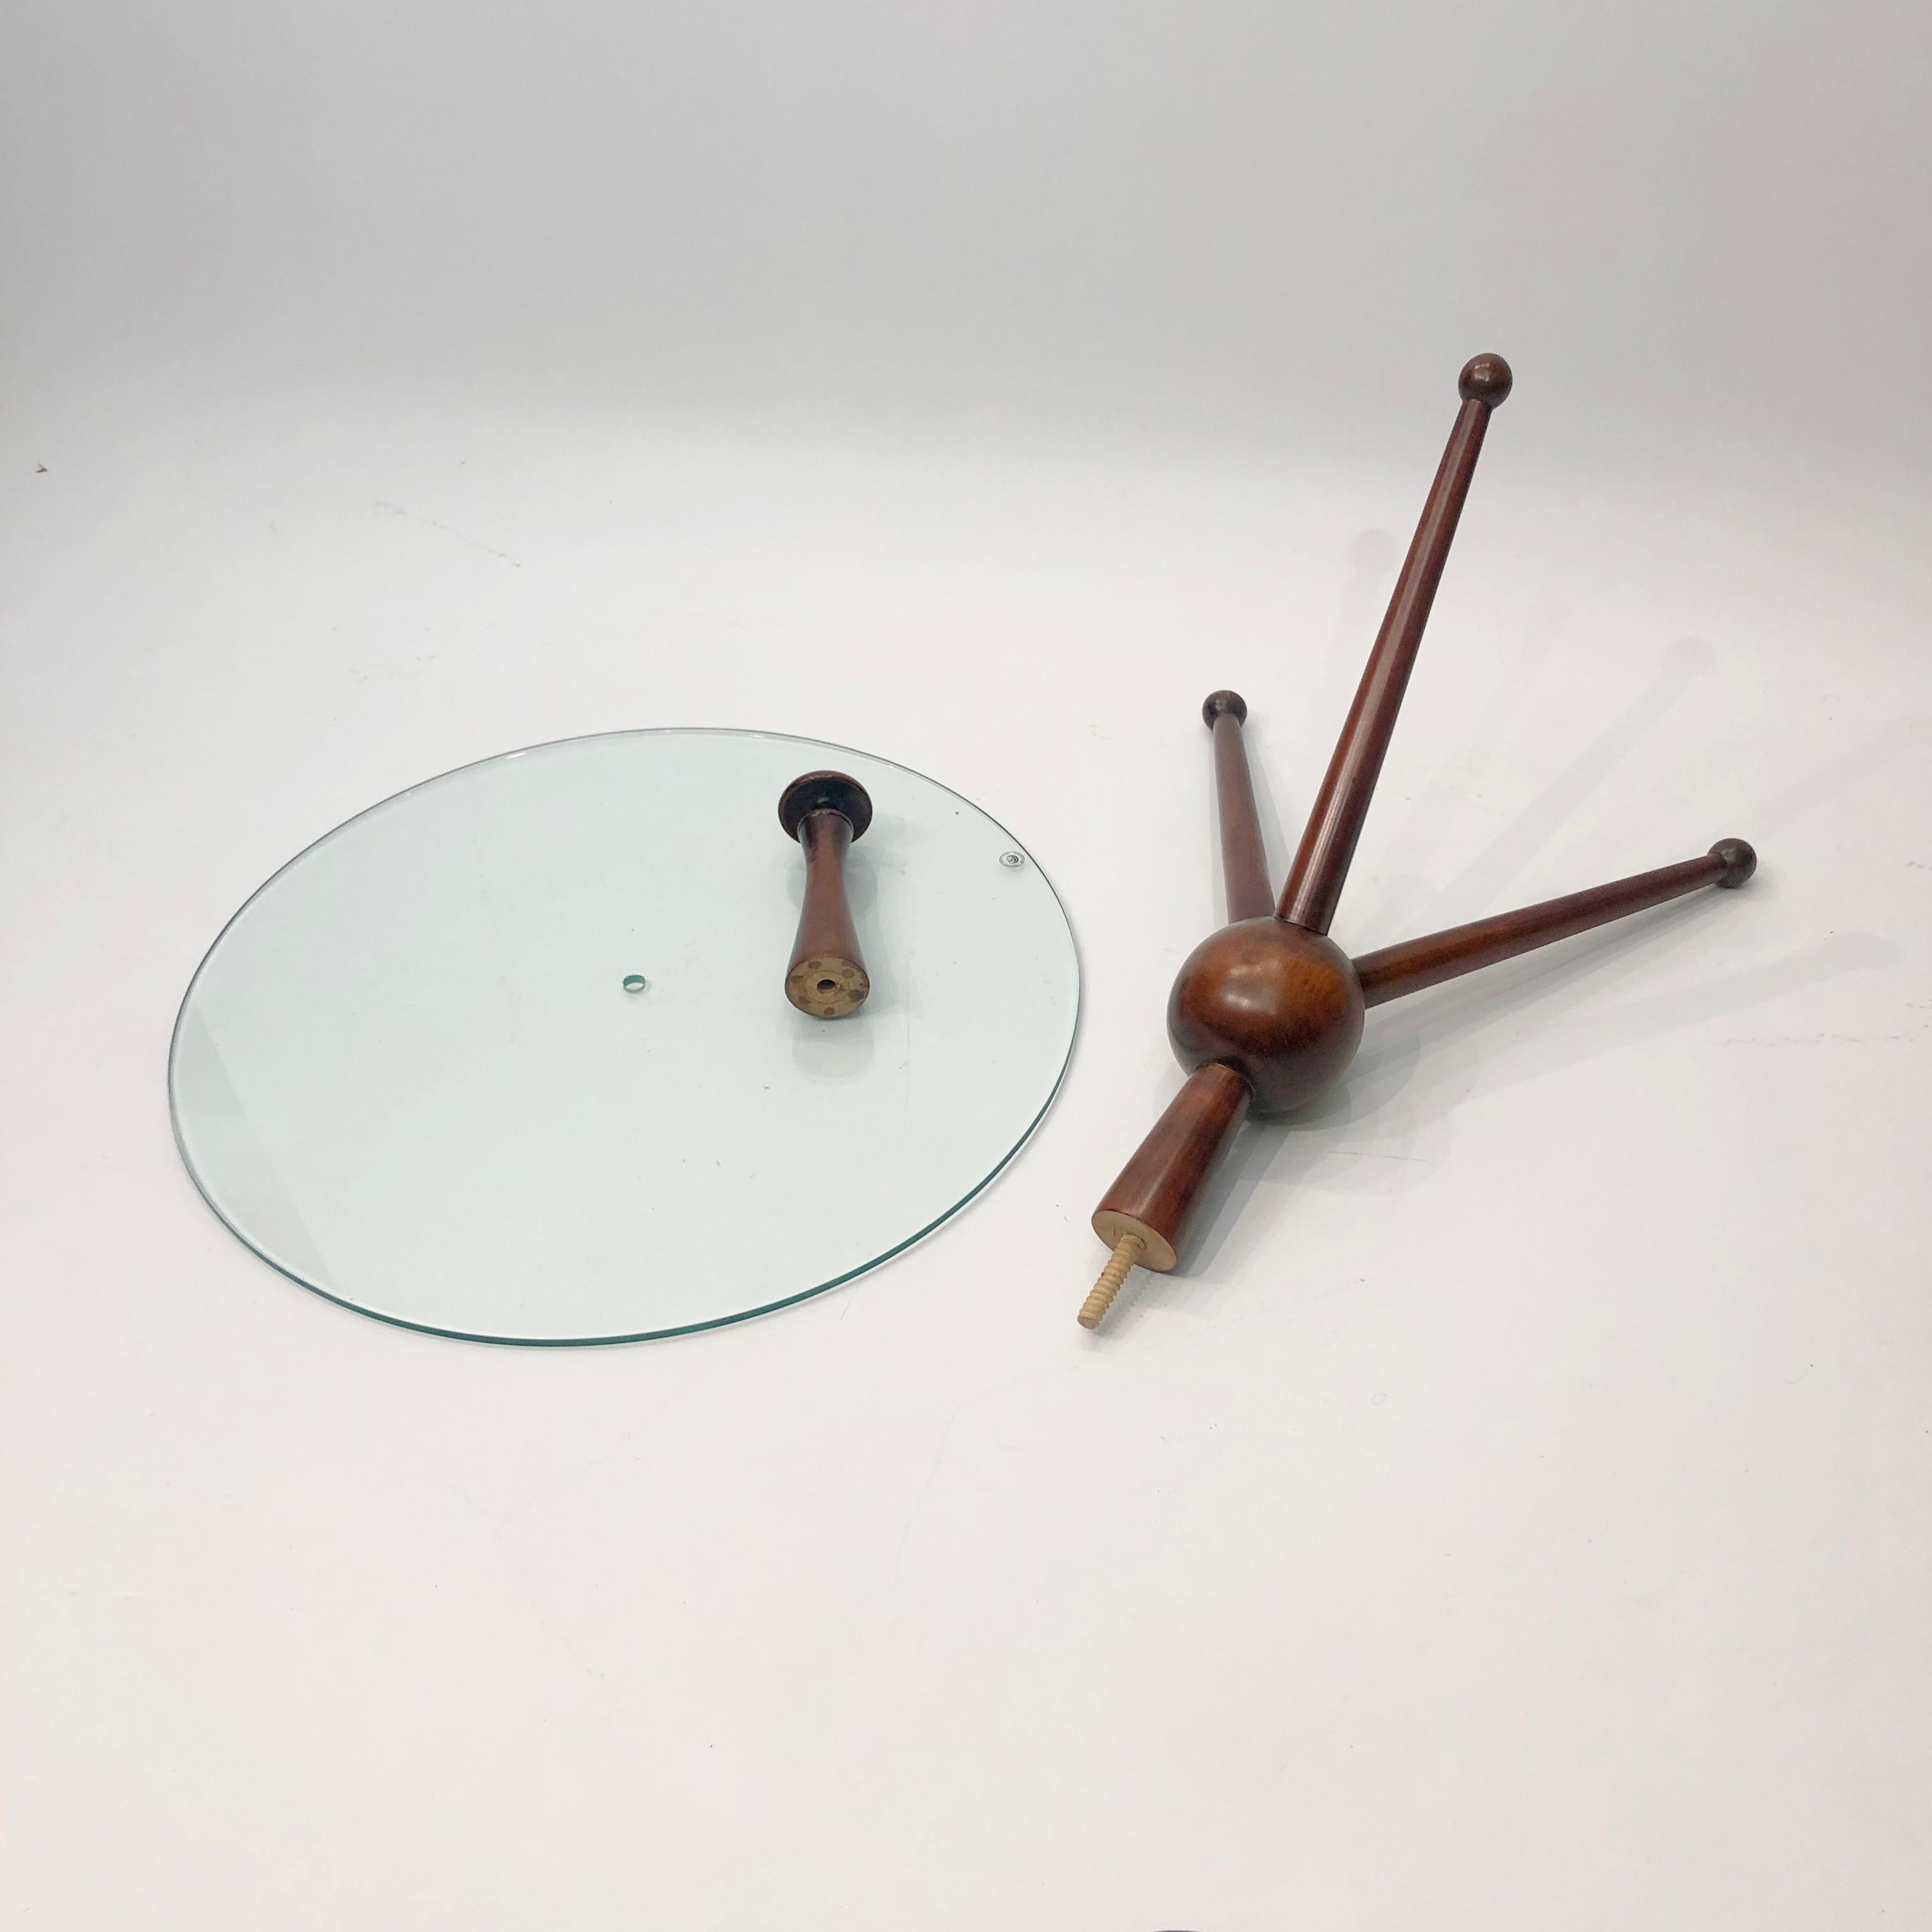 Cesare Lacca Tripod Side Table #1 1950s Midcentury Italian Vintage Wood Glass 6